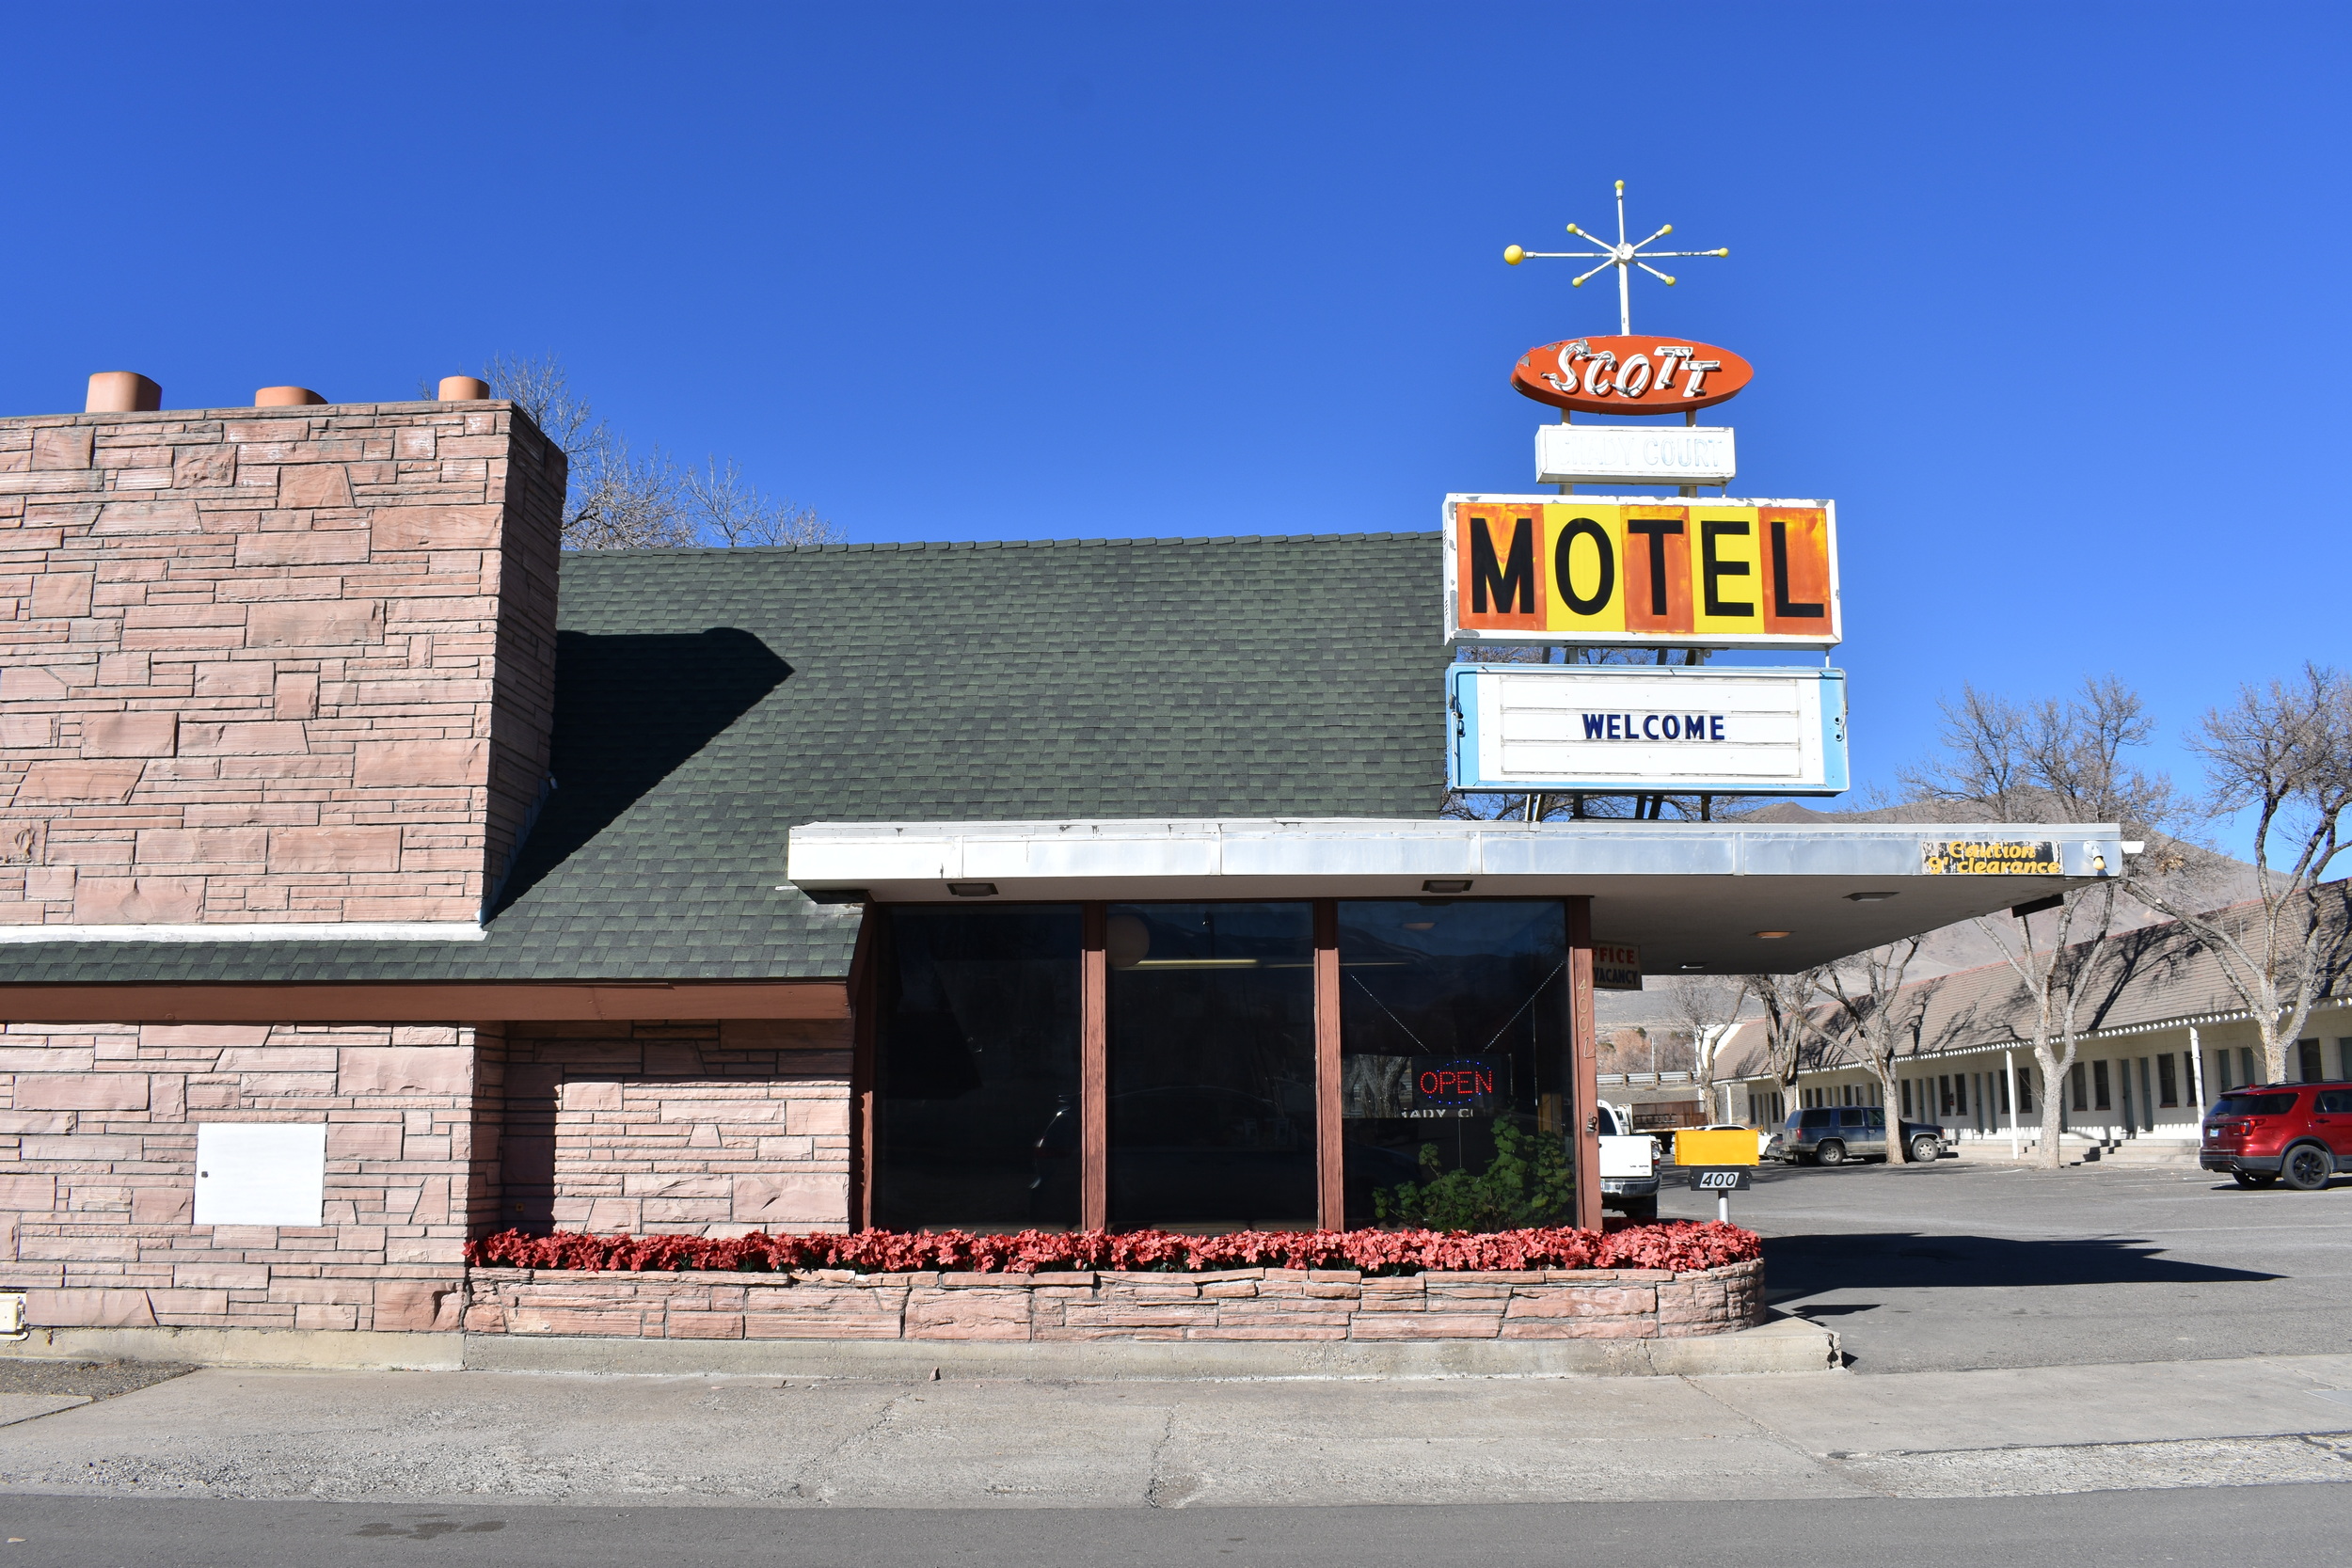 Scott Shady Court Motel roof mounted sign, Winnemucca, Nevada